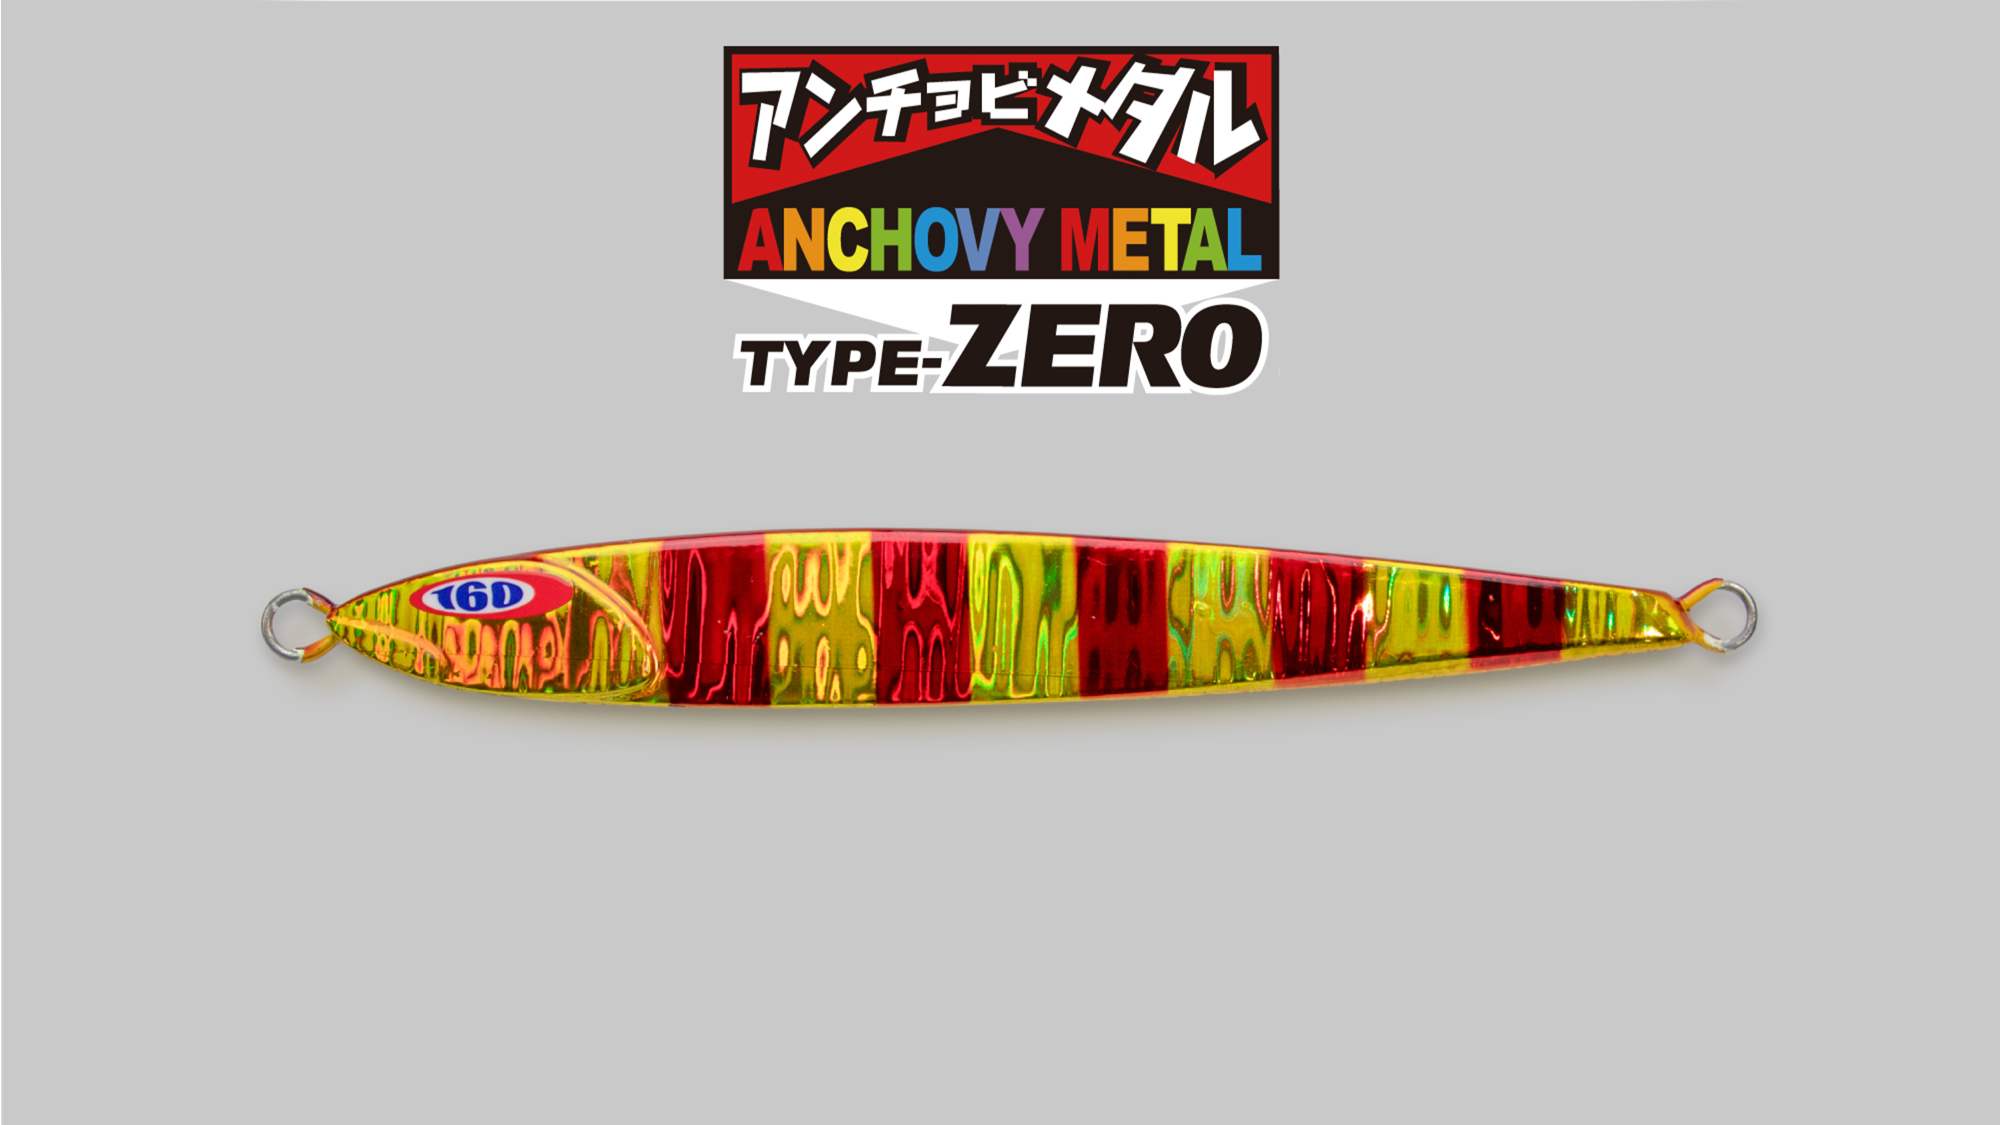 Anchovy Metal Type Zero ANCHOVYMETAL TYPE-ZERO / Anchovy Metal TYPE-Zero